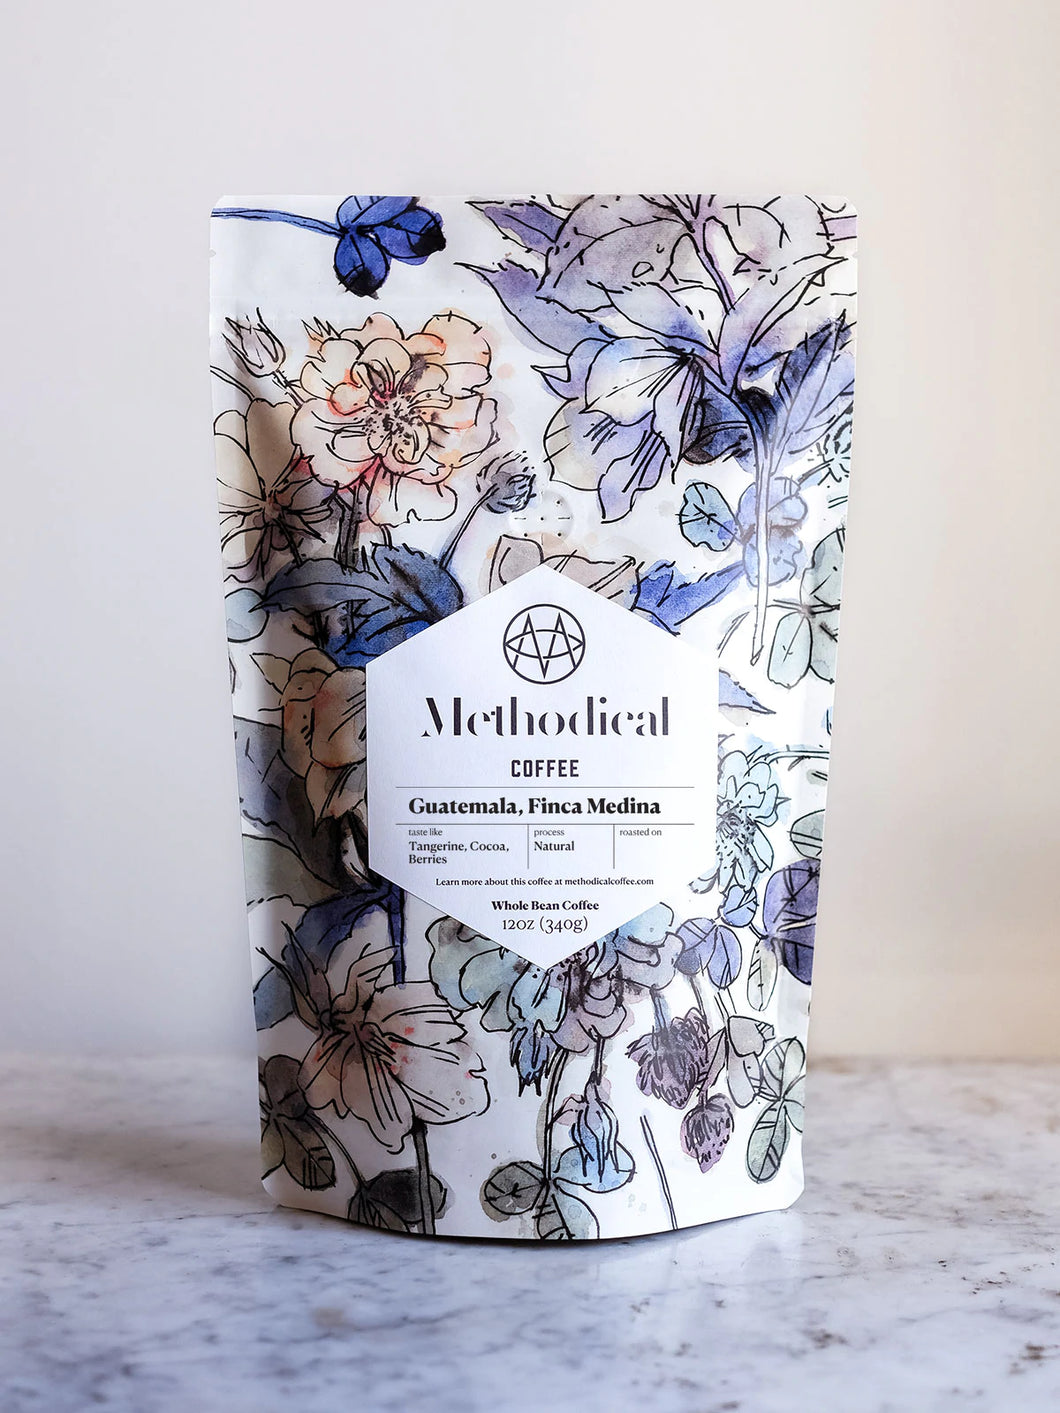 Methodical Coffee - Guatemala, Finca Medina